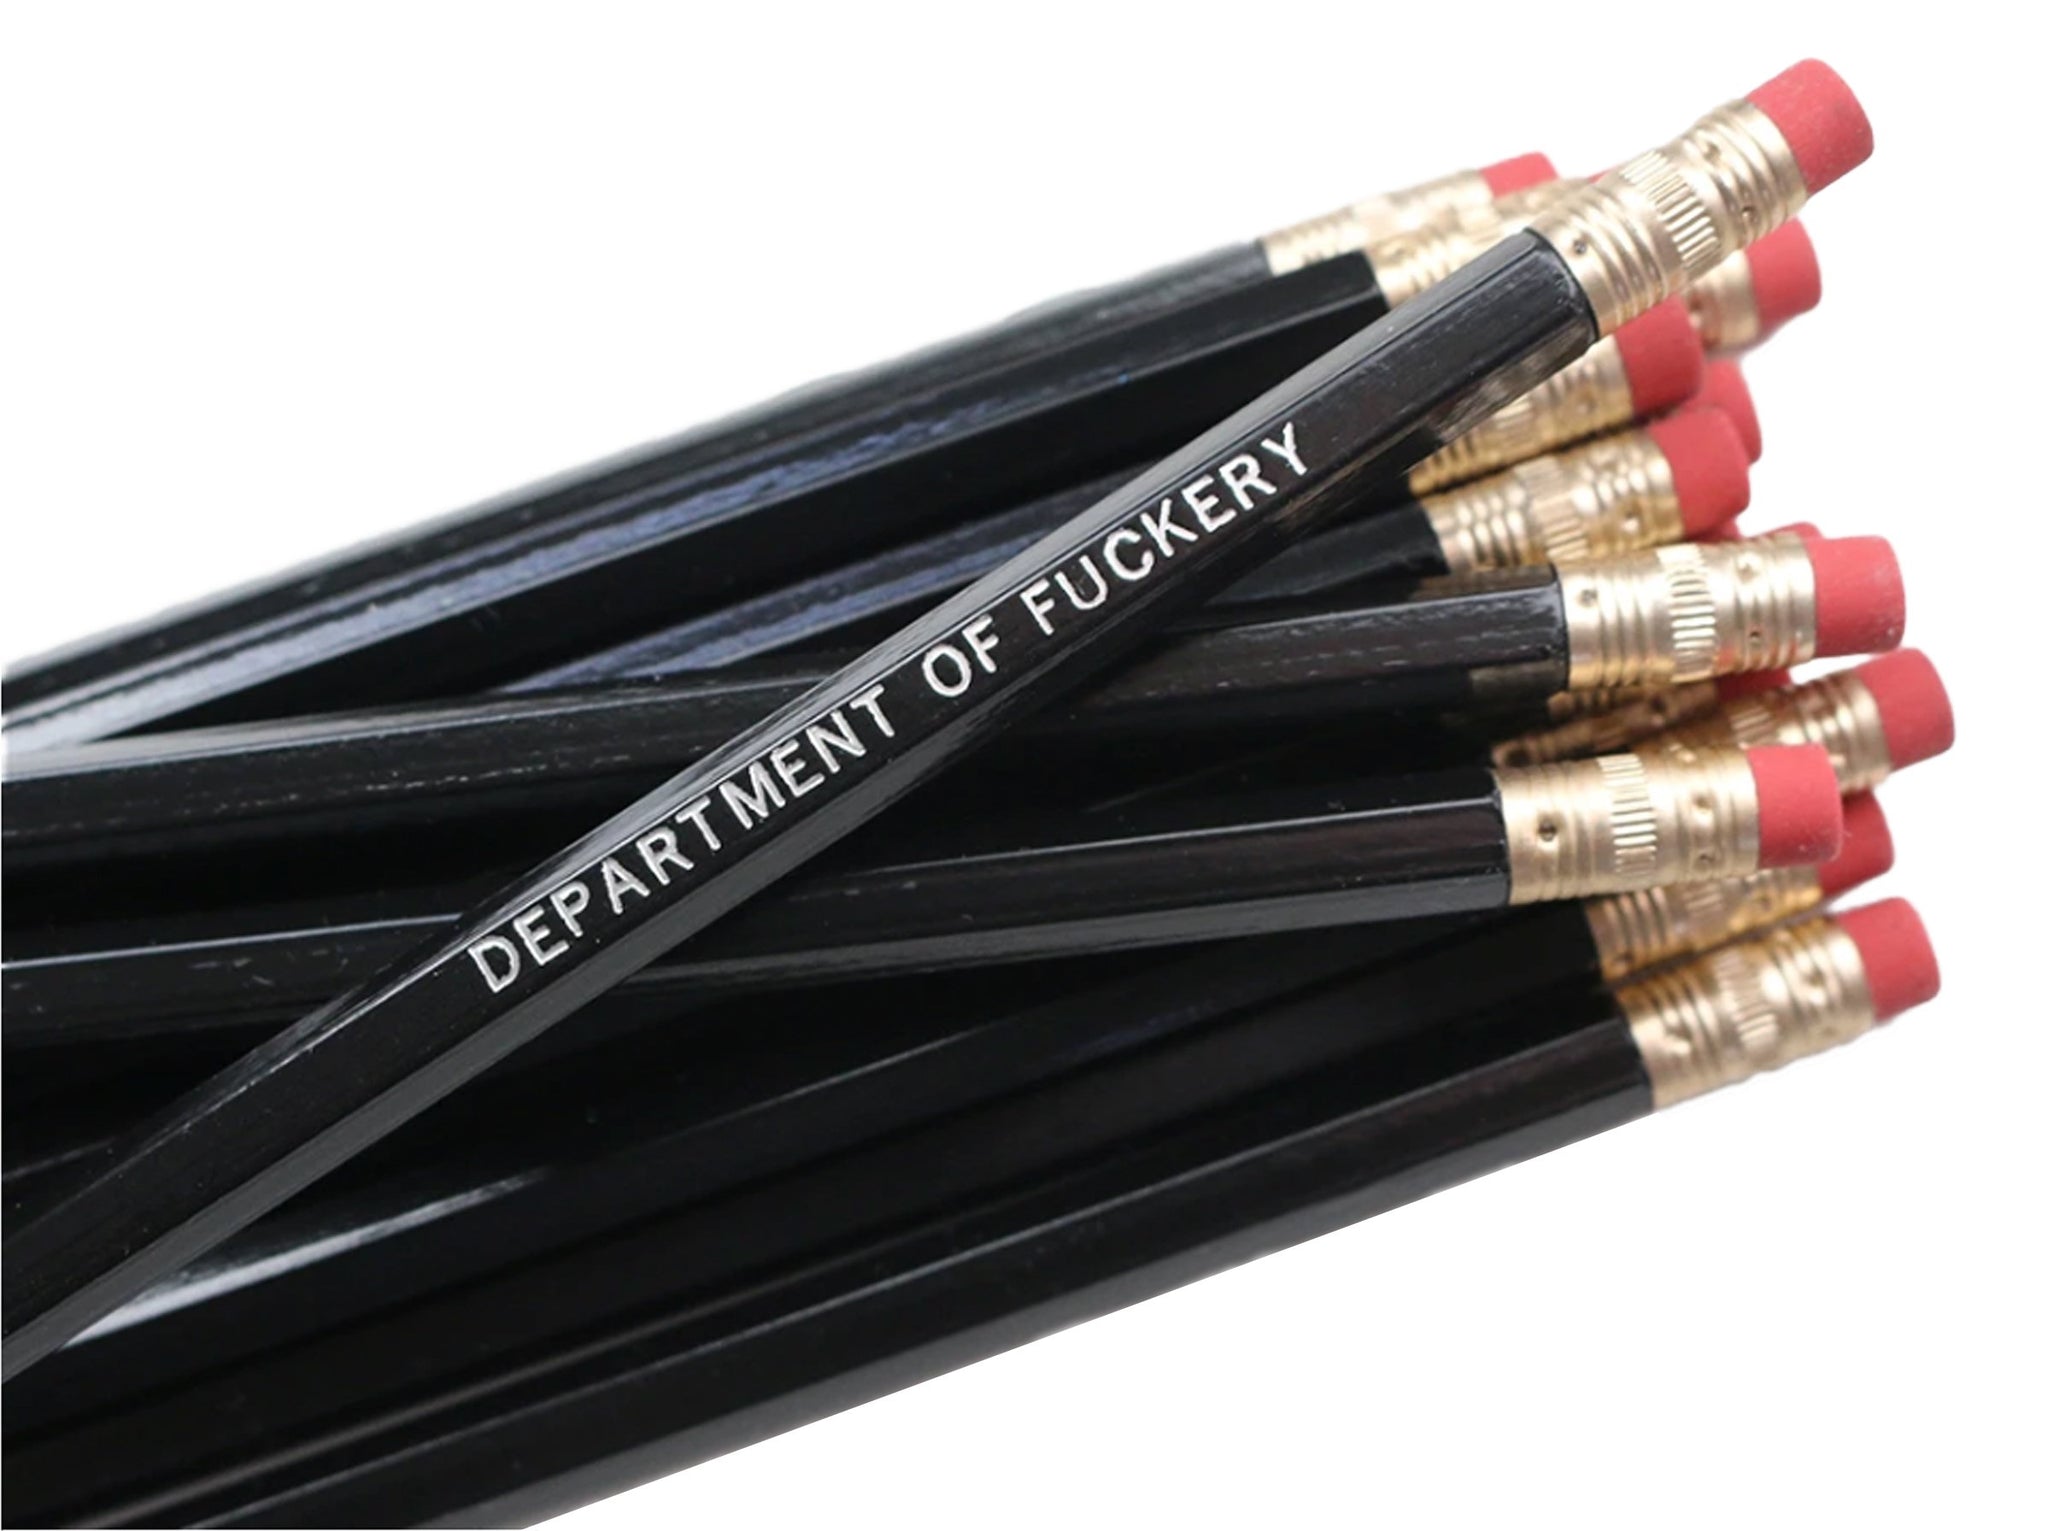 Department of Fuckery Pen Set in Black | Set of 3 Funny Sweary Profanity  Ballpoint Pens